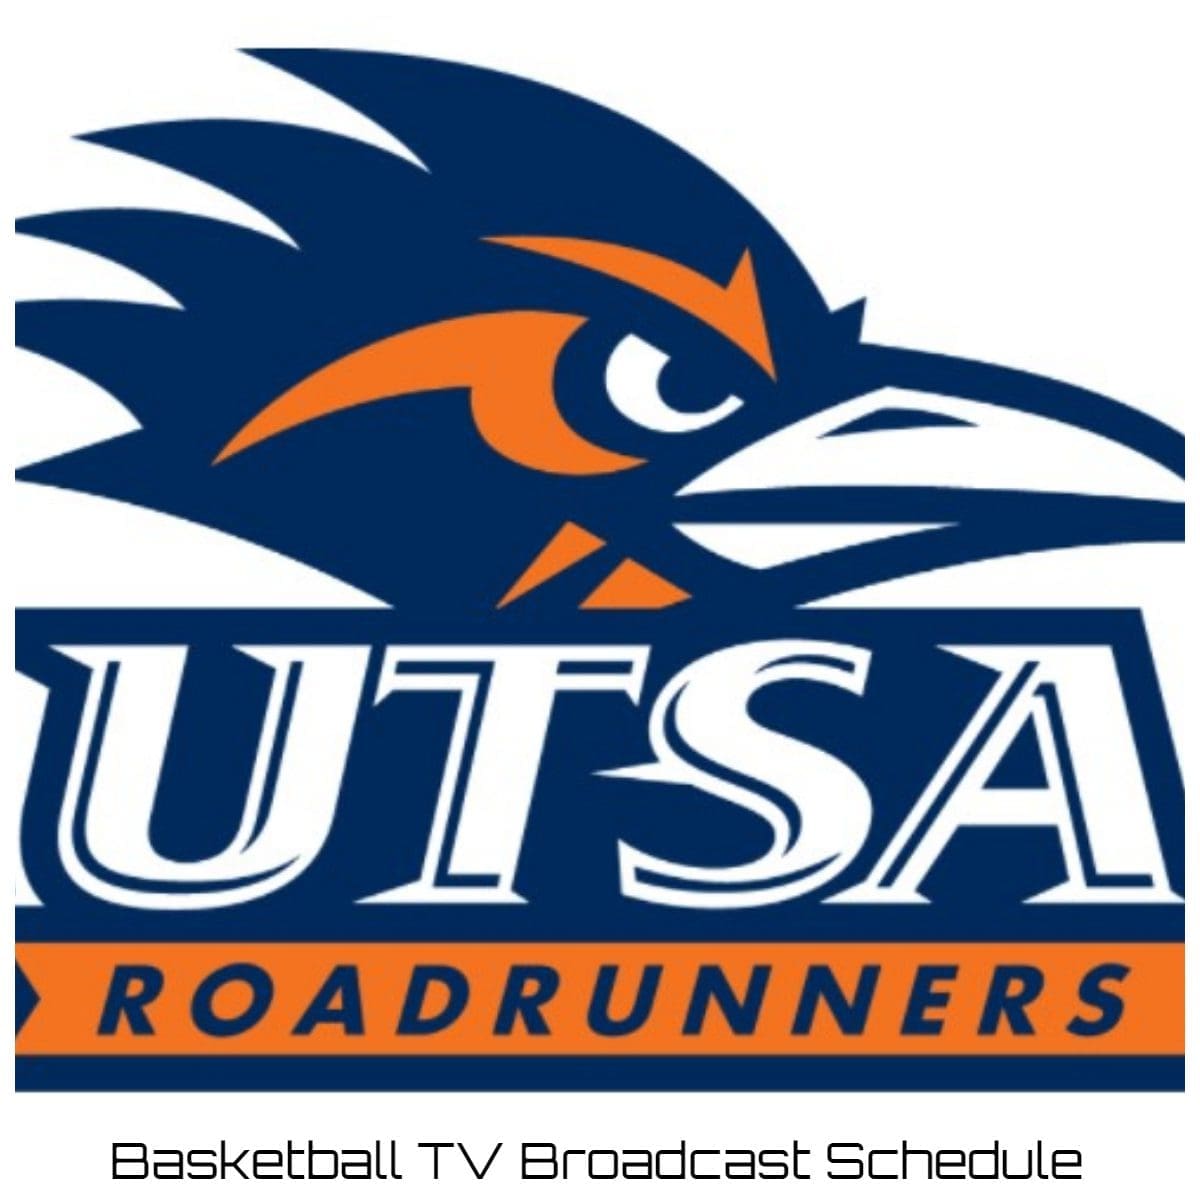 UTSA Roadrunners Basketball TV Broadcast Schedule